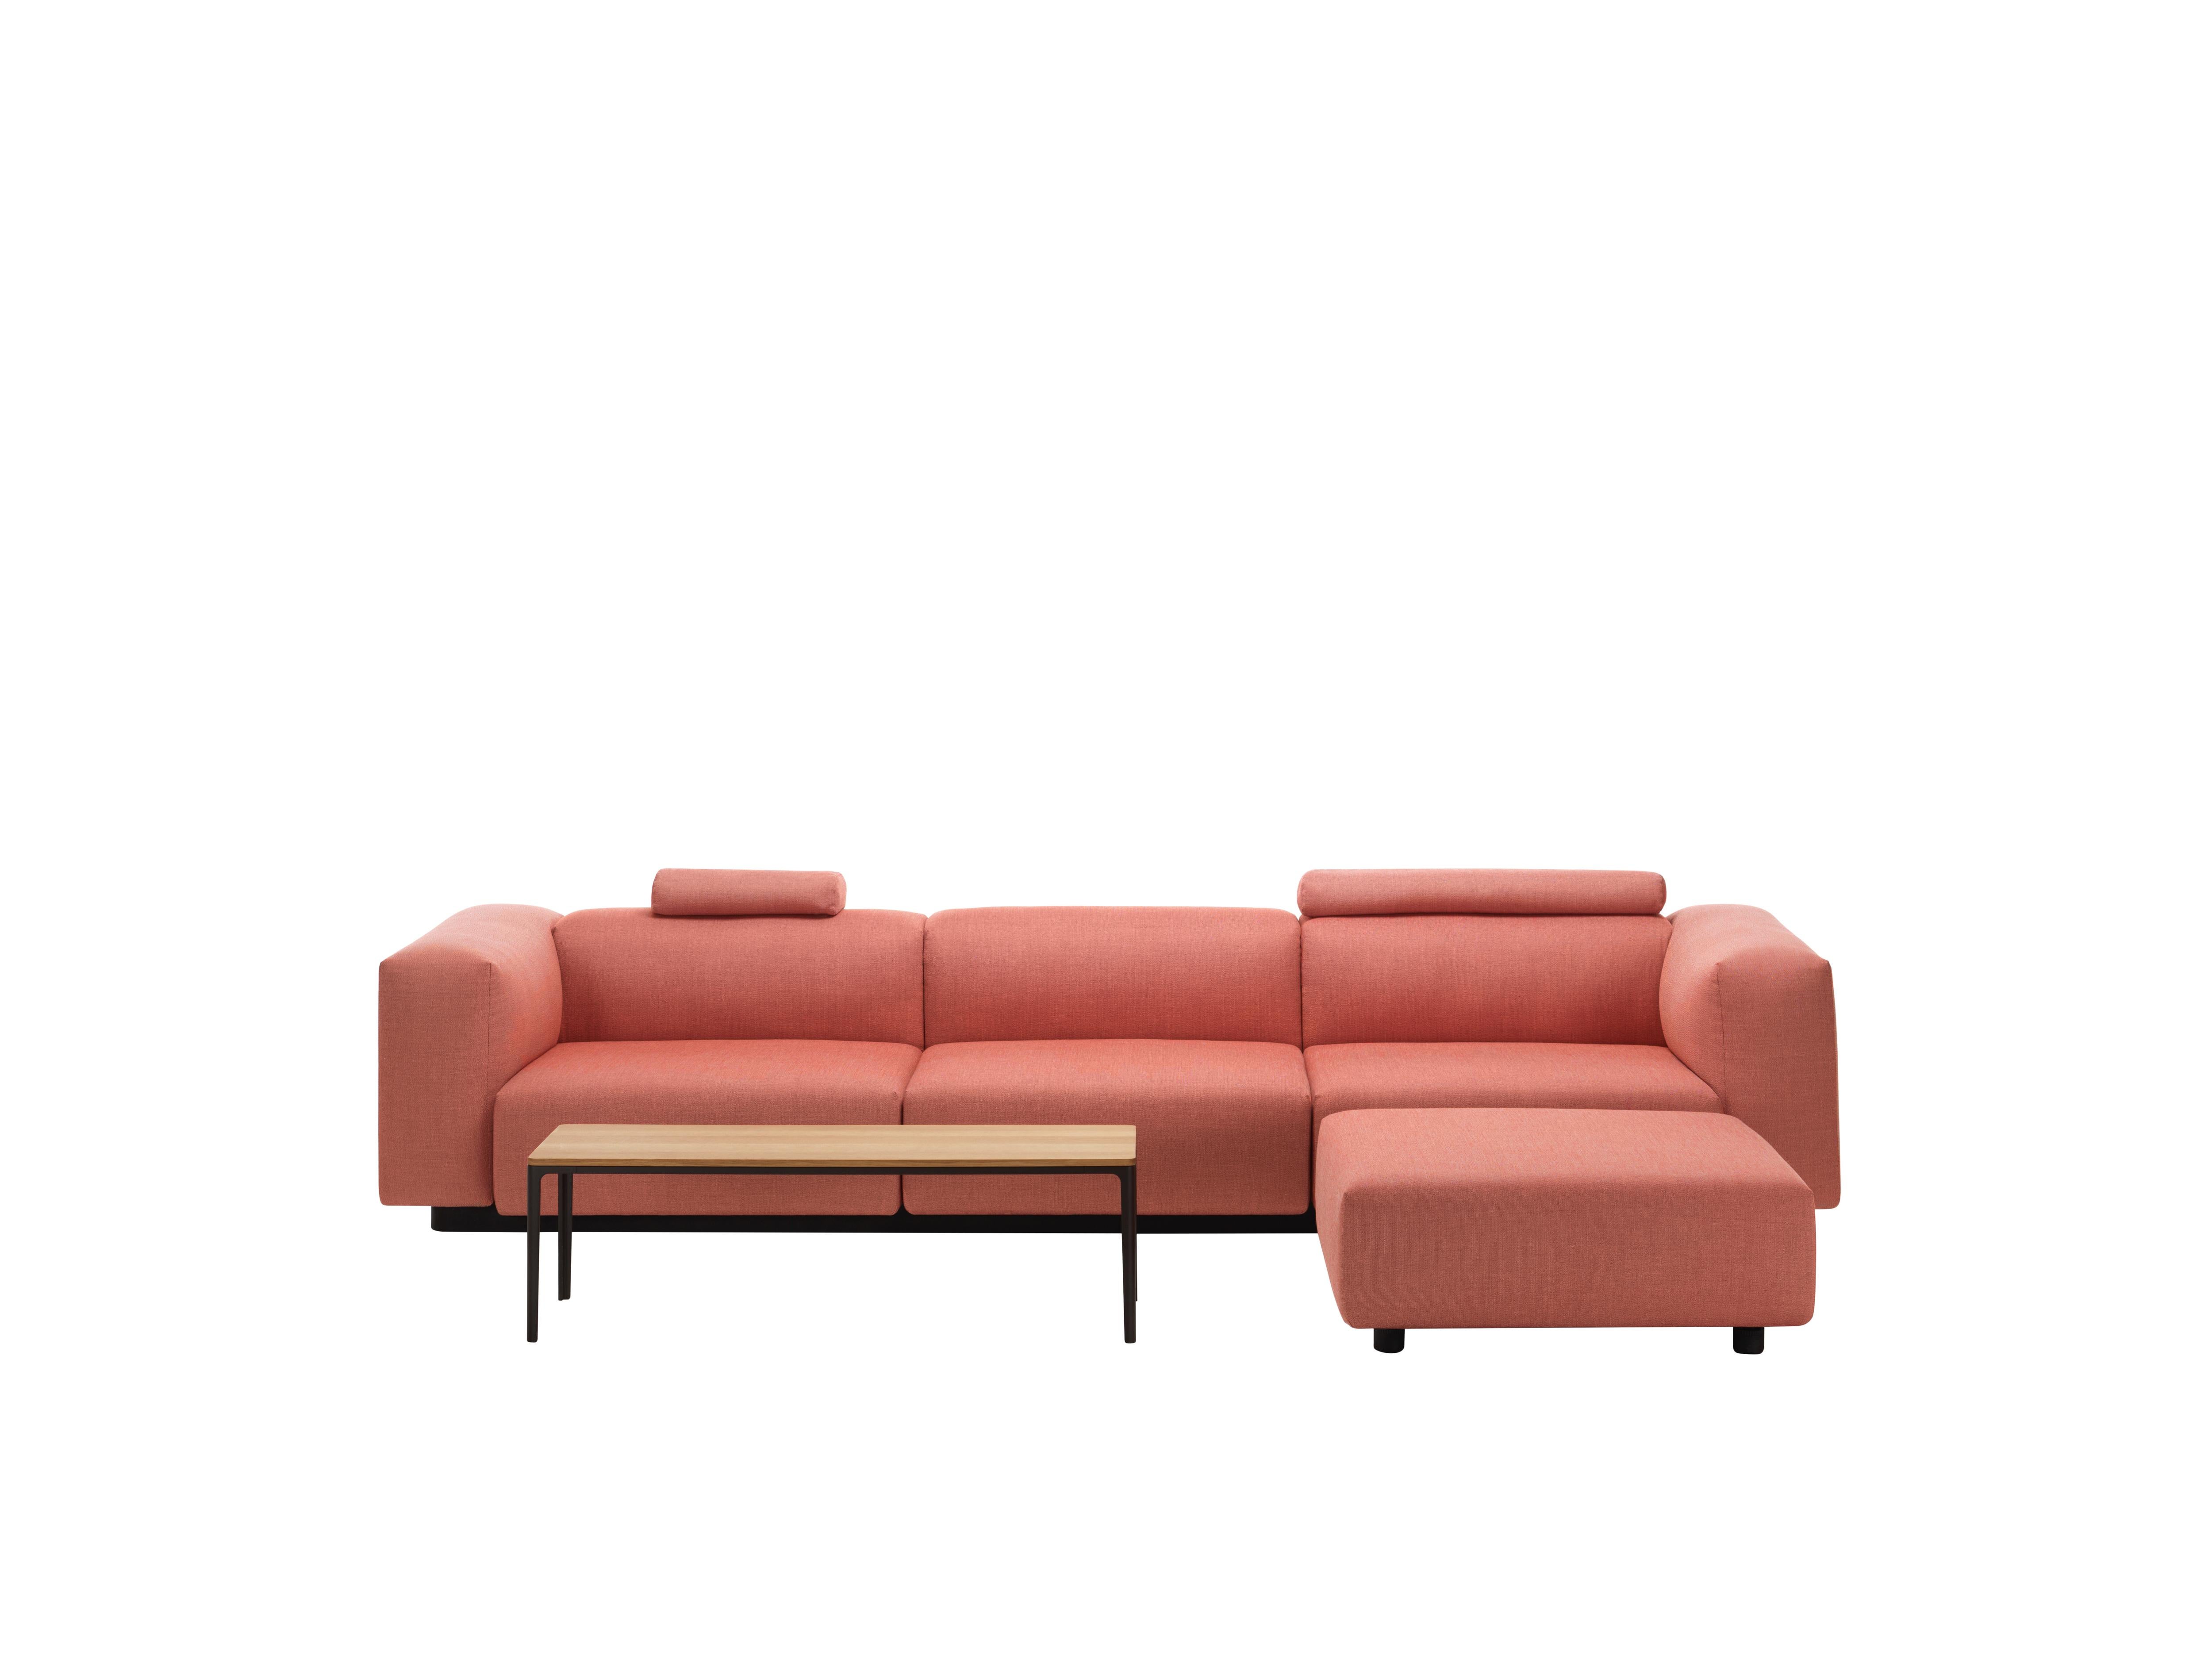 Swiss Vitra Soft Modular Rose & Orange 3-Seat Sofa w/Ottoman & Cushion Jasper Morrison For Sale